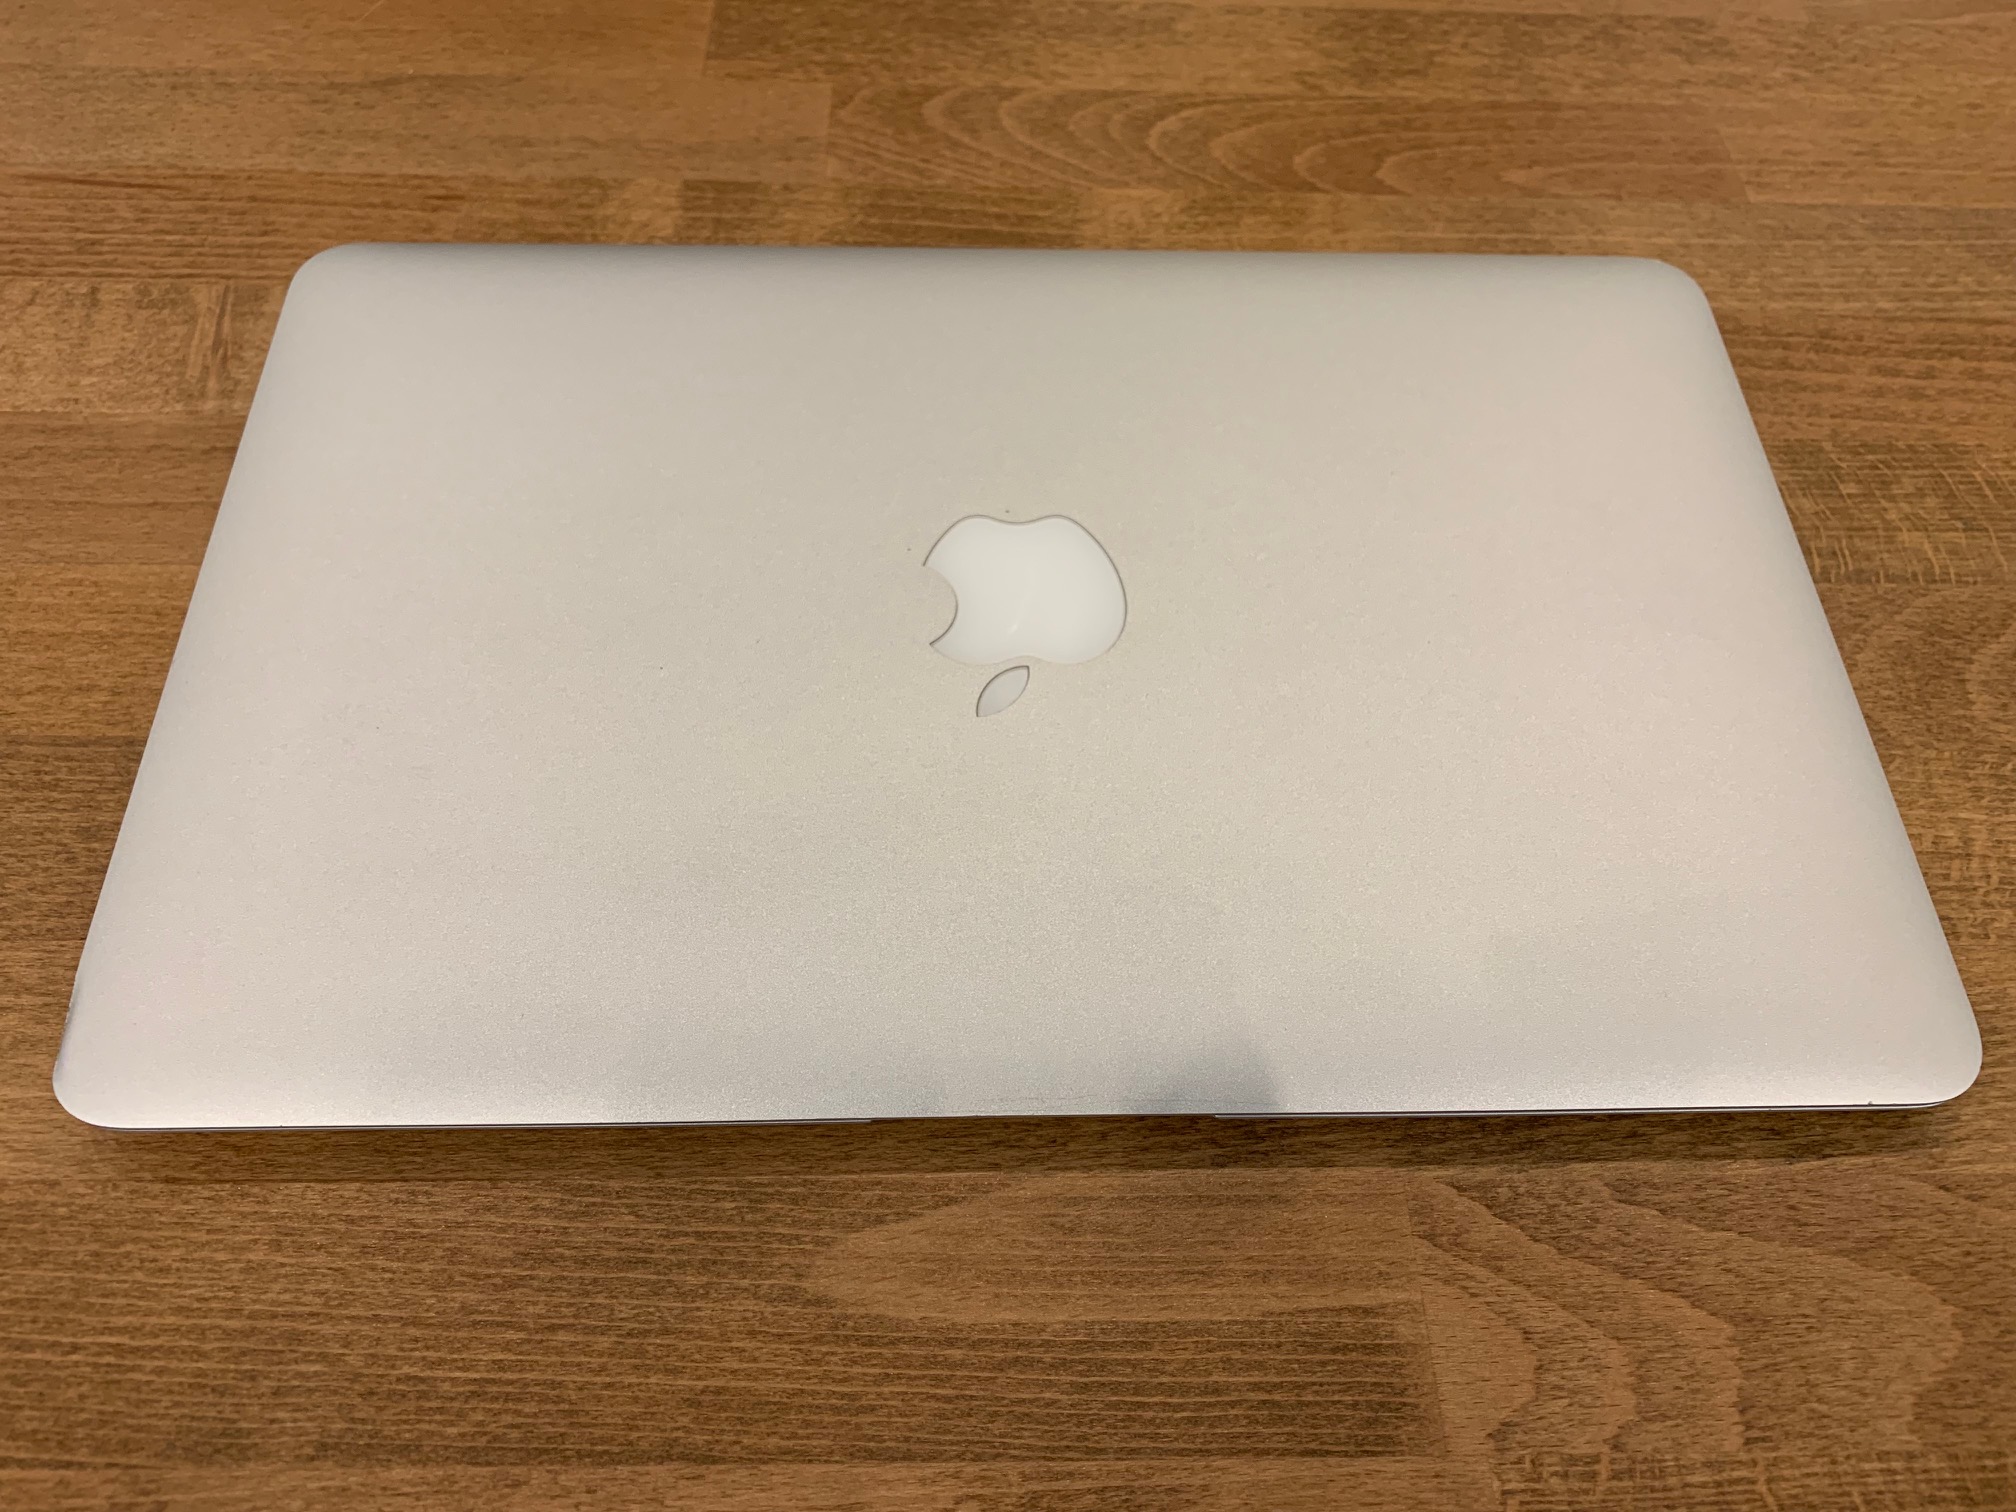 macbook 11 inch 2011